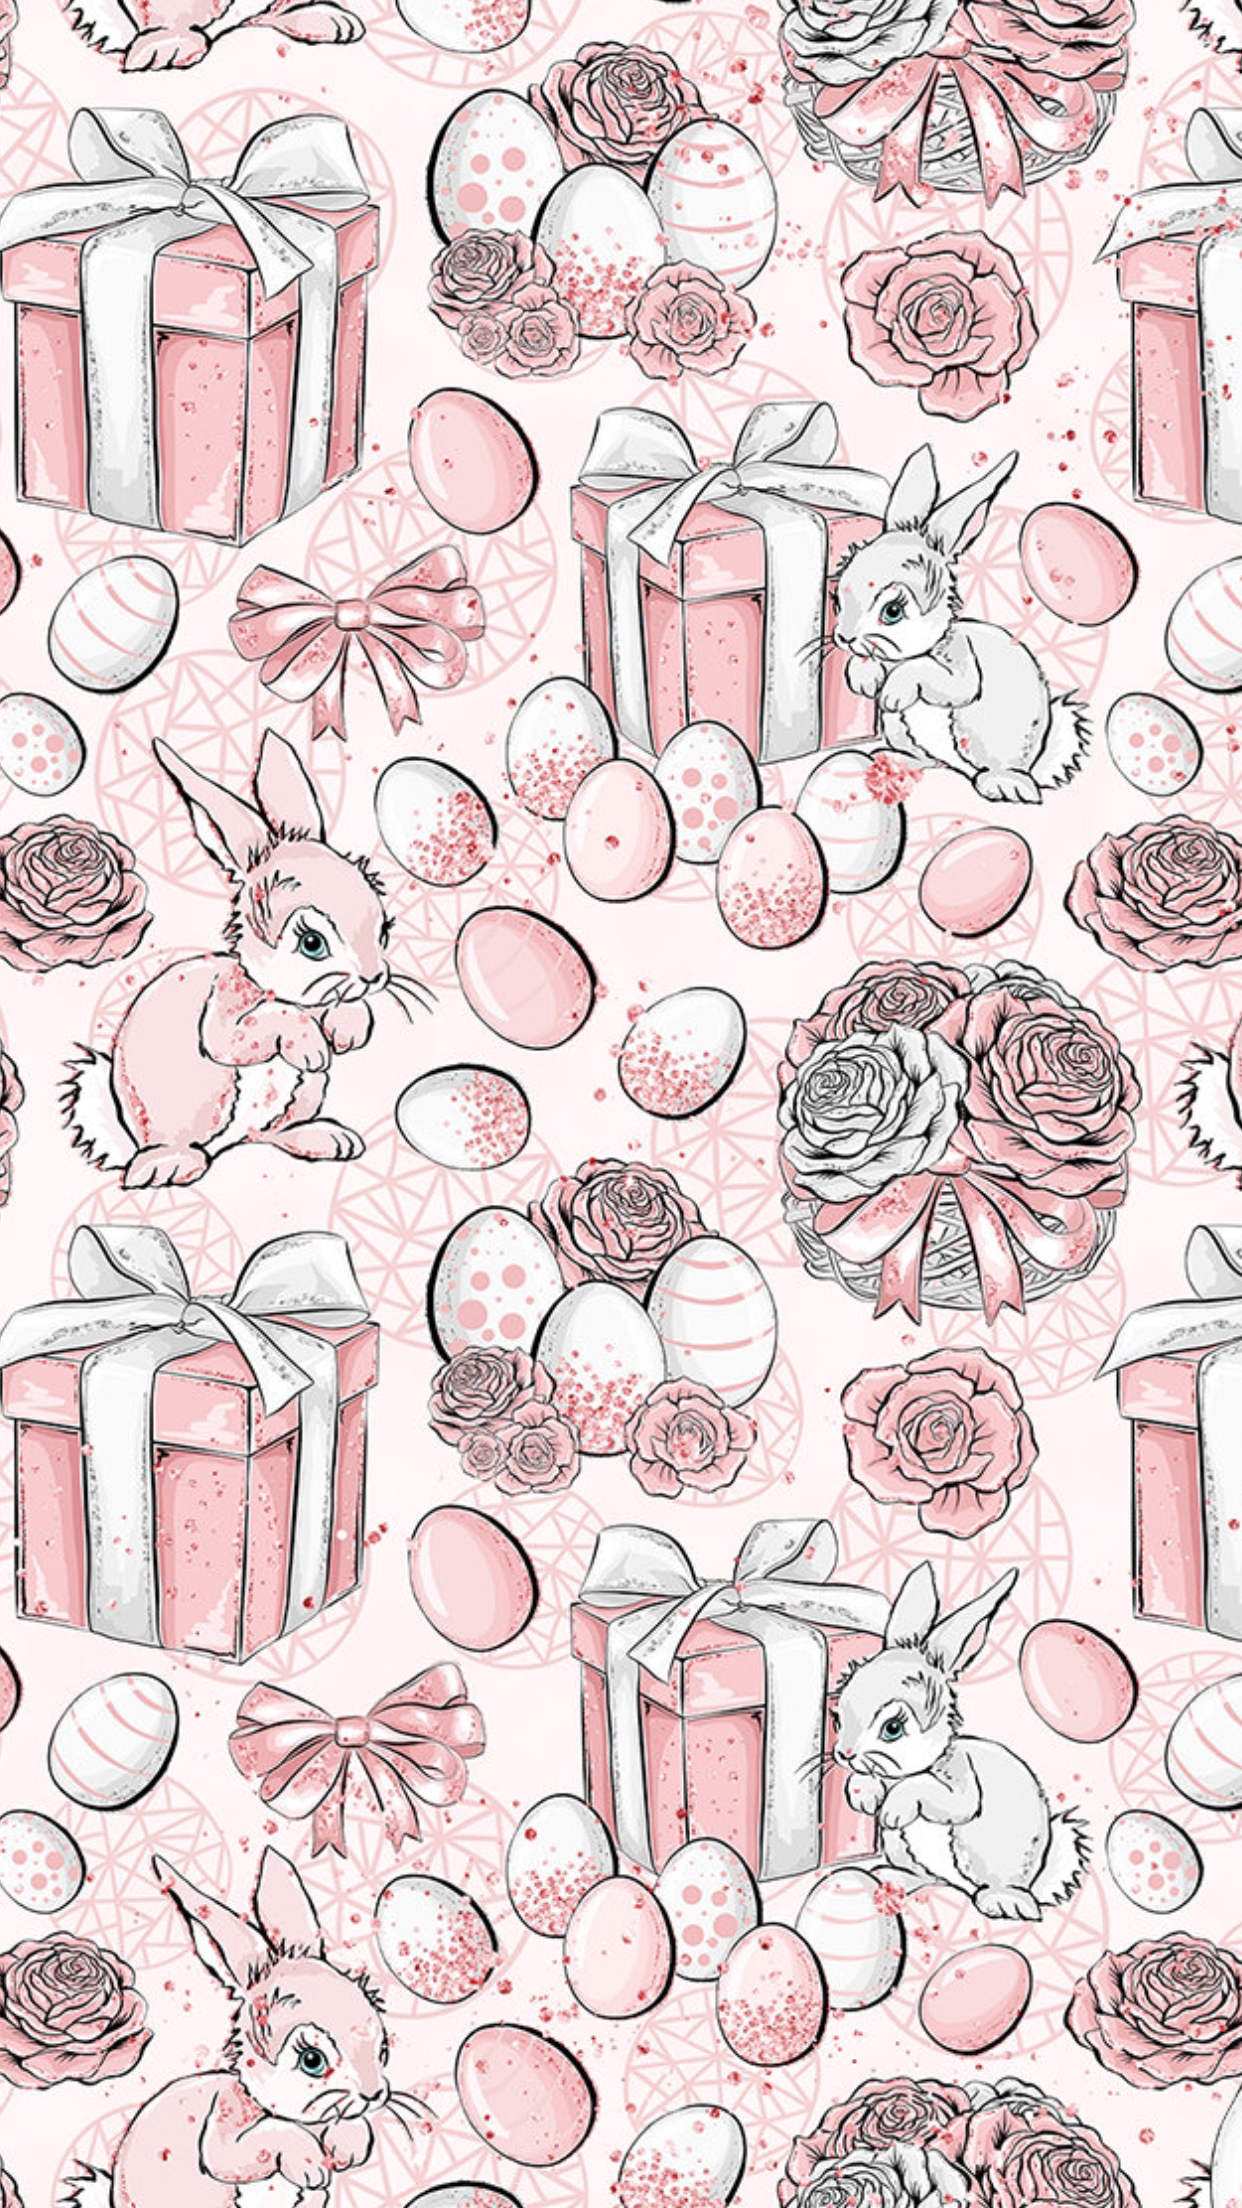 W.✿‿PHONE. Easter wallpaper, Bunny wallpaper, Wallpaper iphone cute